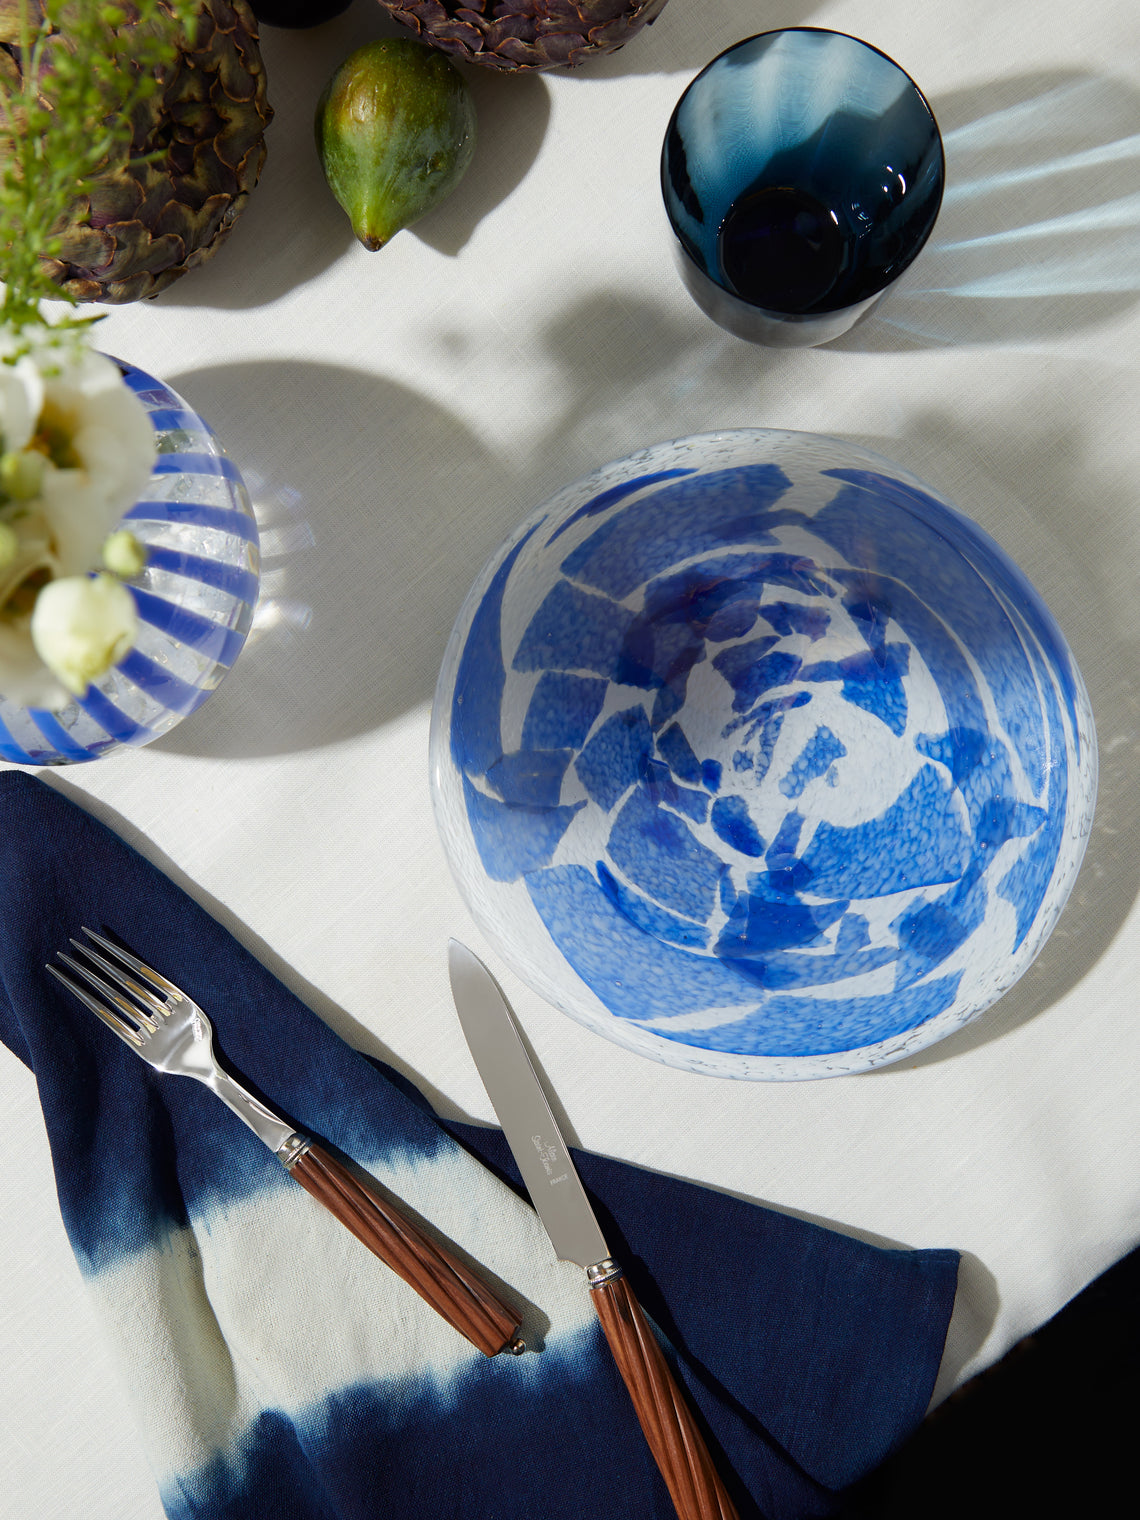 Stories of Italy - Hand-Blown Murano Glass Dessert Plates (Set of 2) - Light Blue - ABASK